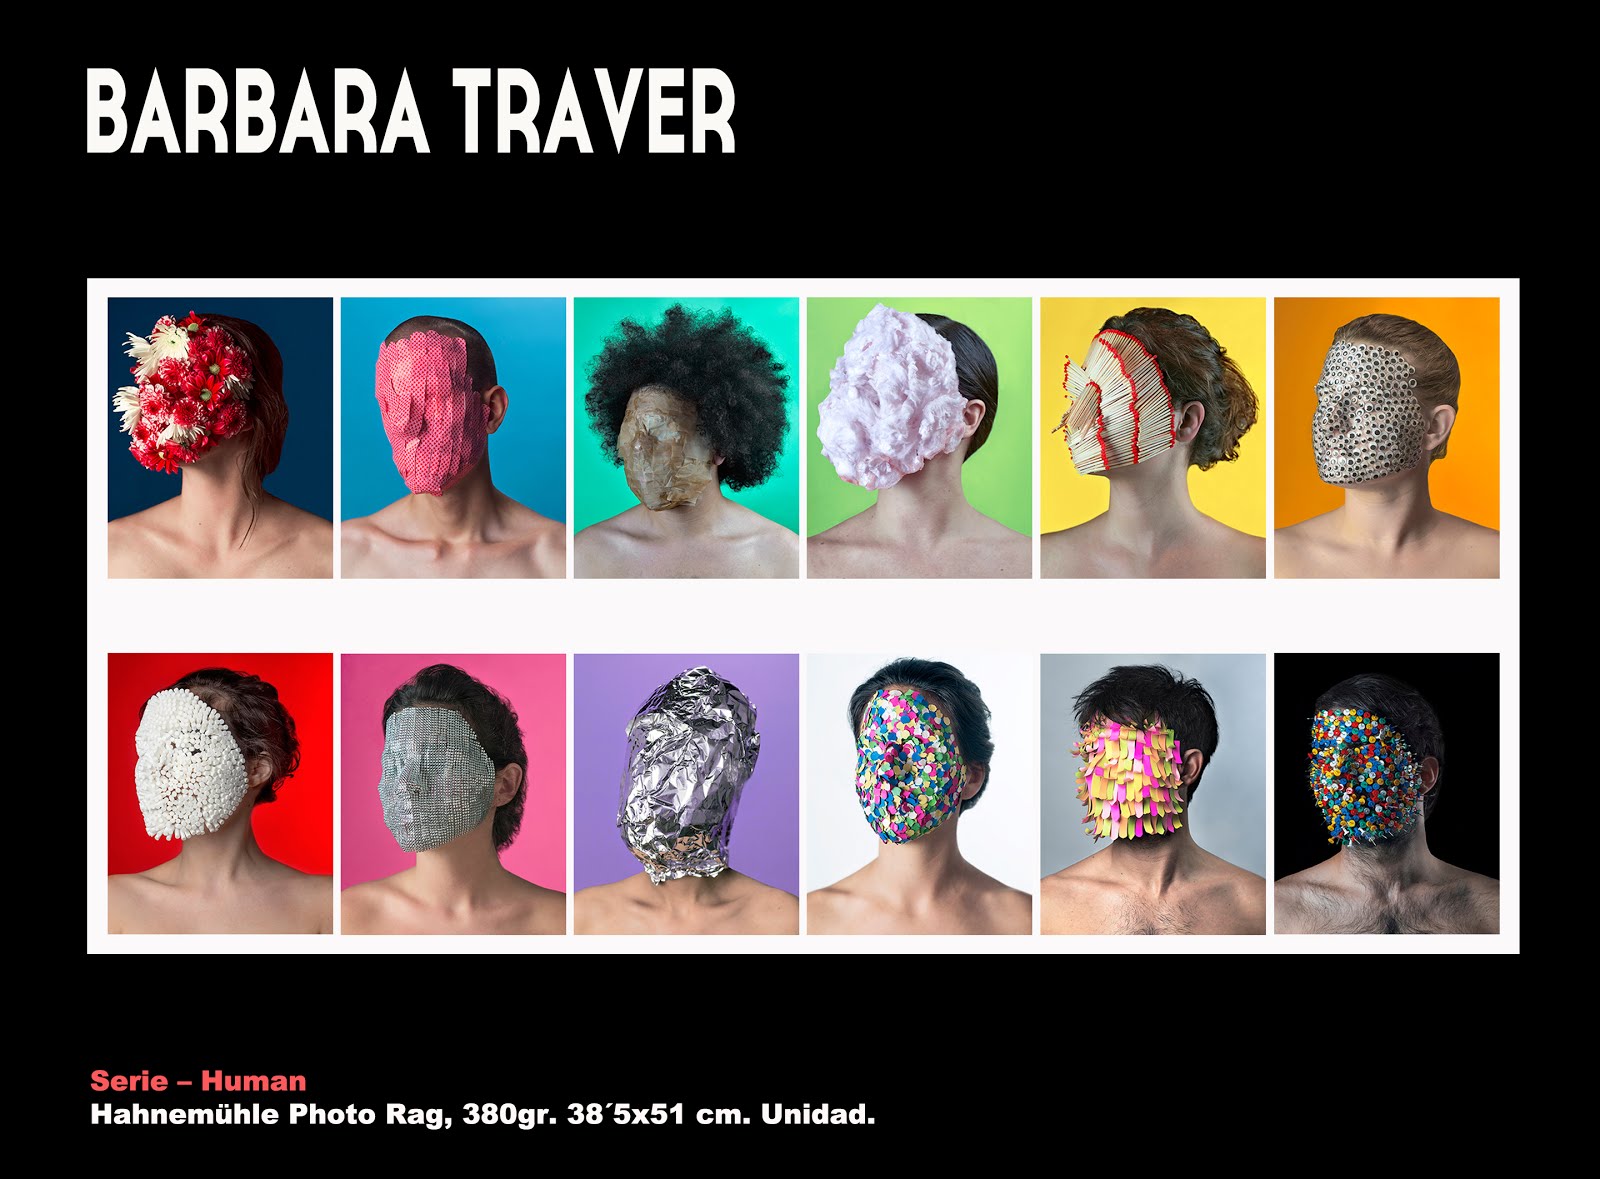 BARBARA TRAVER